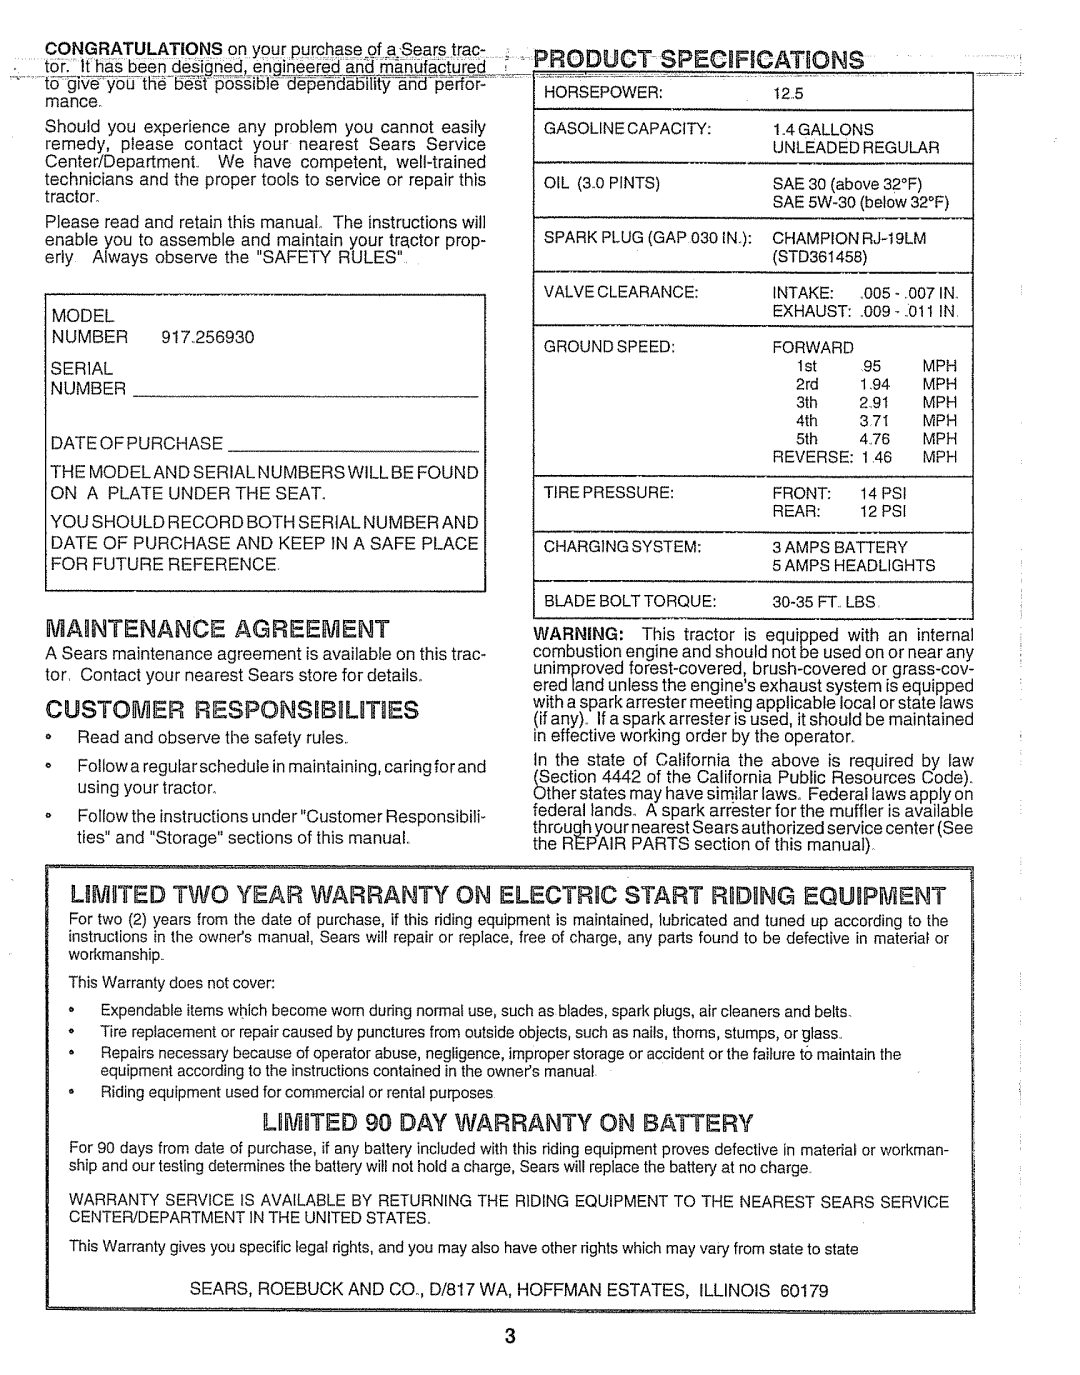 Craftsman 917.25693 owner manual Maintenance Agreement, Custo Er Responskb L T Es, Day Warranty On Battery 